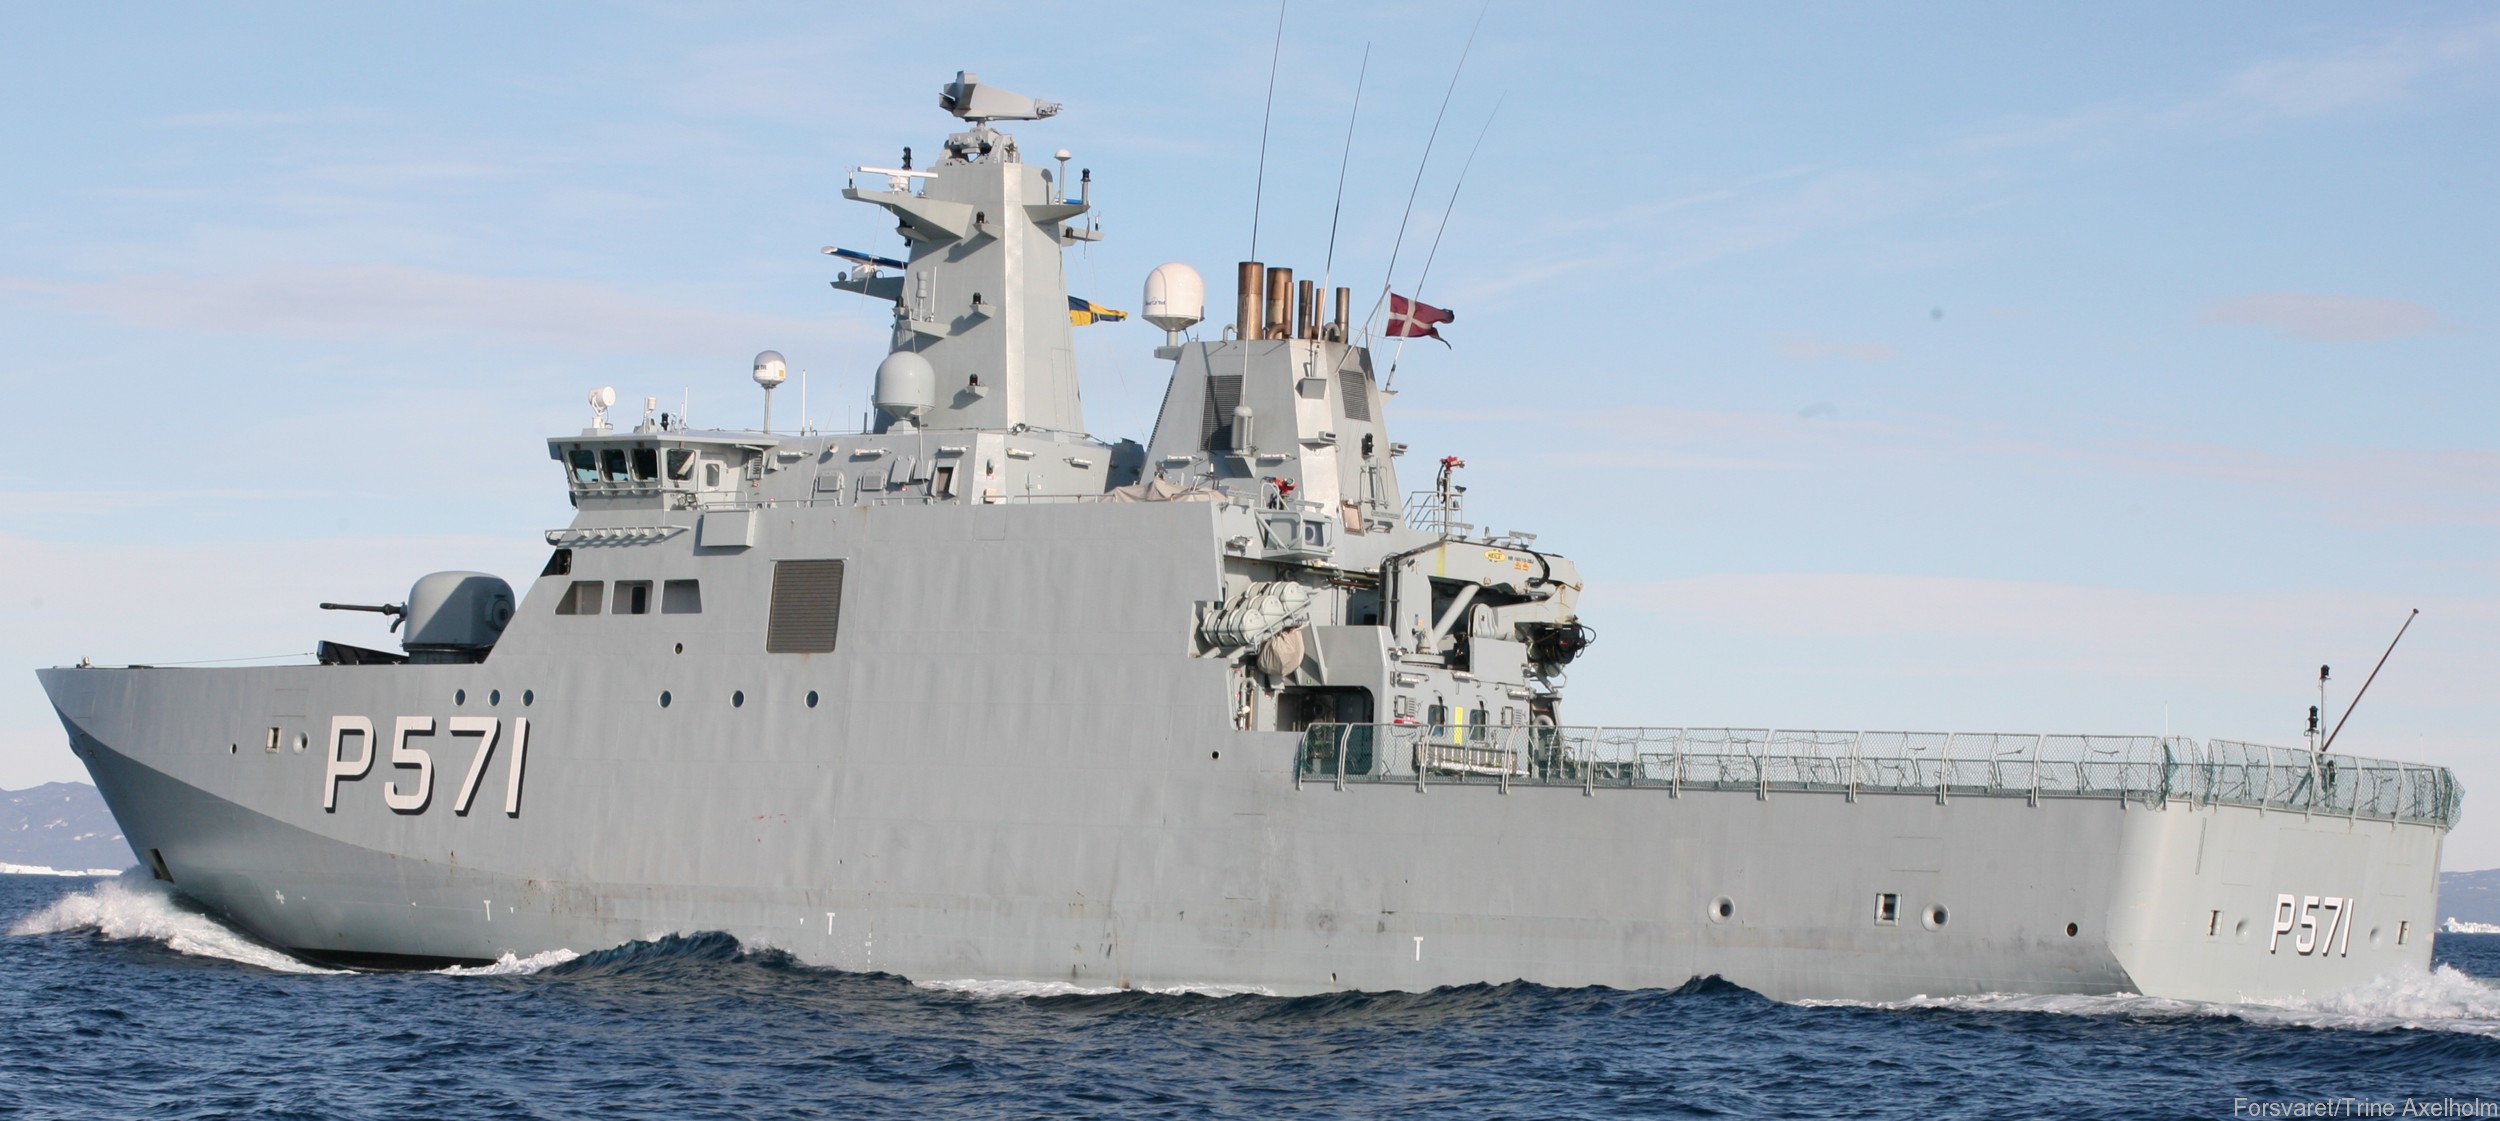 p-571 hdms ejnar mikkelsen knud rasmussen class offshore patrol vessel opv royal danish navy inspektionsfartøj 23